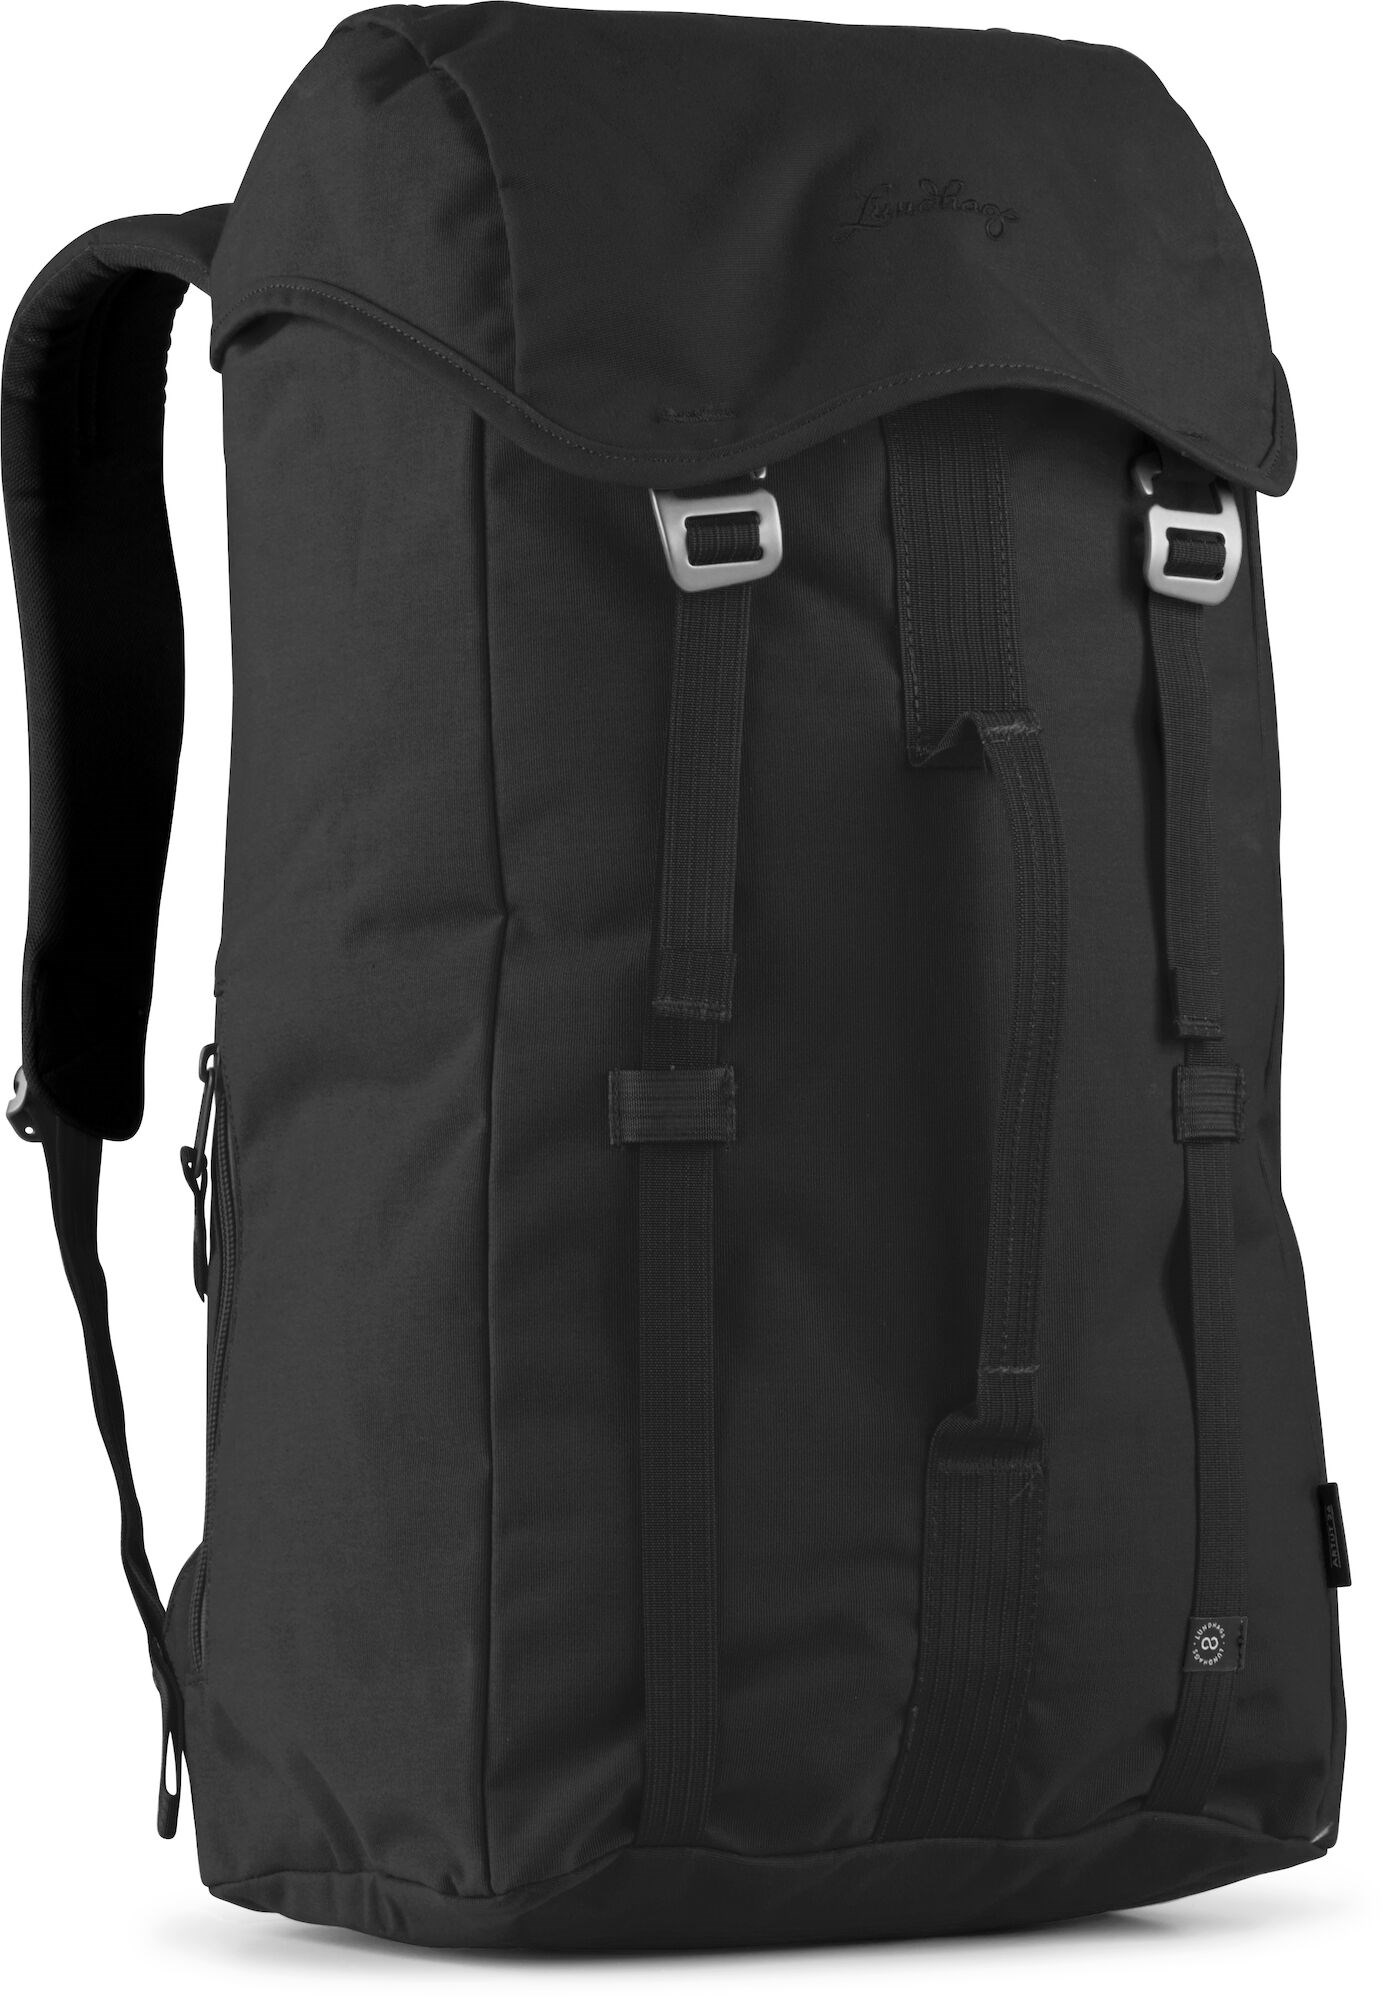 Artut 26 L Backpack